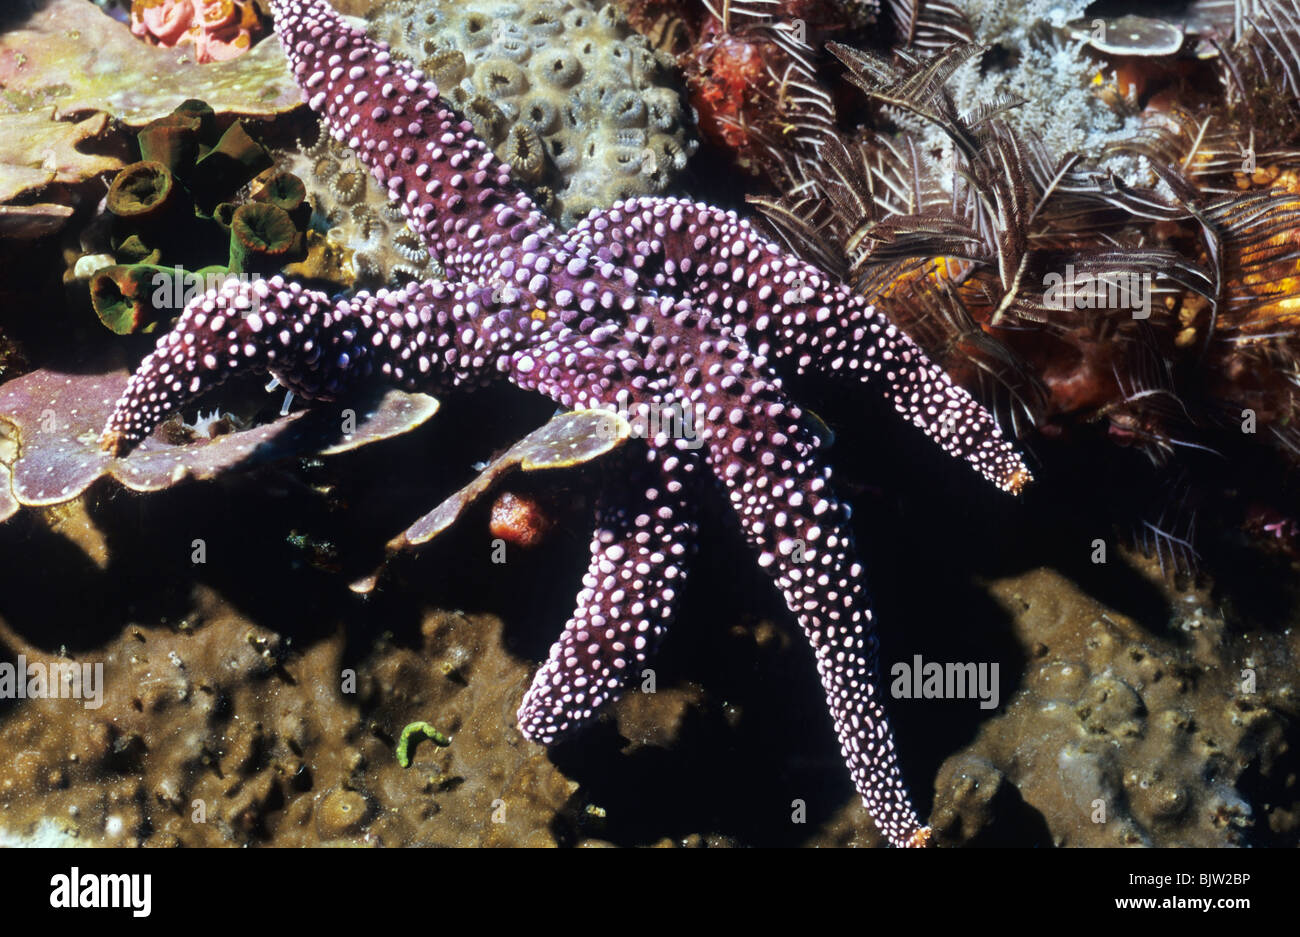 Purple Sunstar. Star fish. Underwater marine life off the Galapagos Islands. Underwater photography. Stock Photo